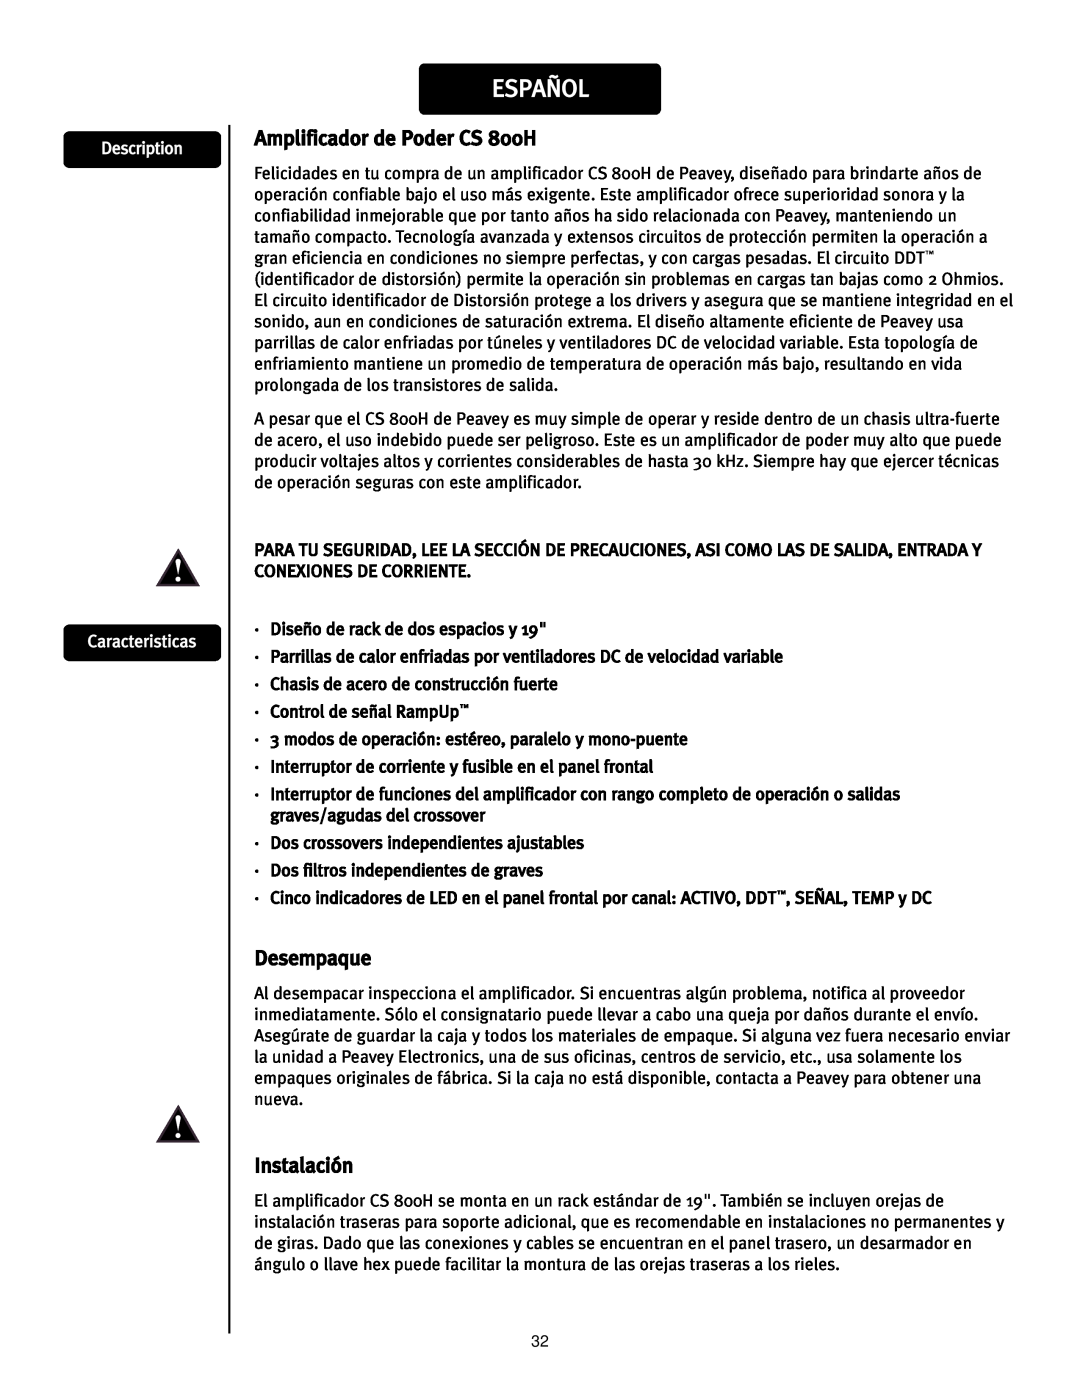 Peavey manual Amplificador de Poder CS 800H, Desempaque, Instalación, Description Caracteristicas, Español 